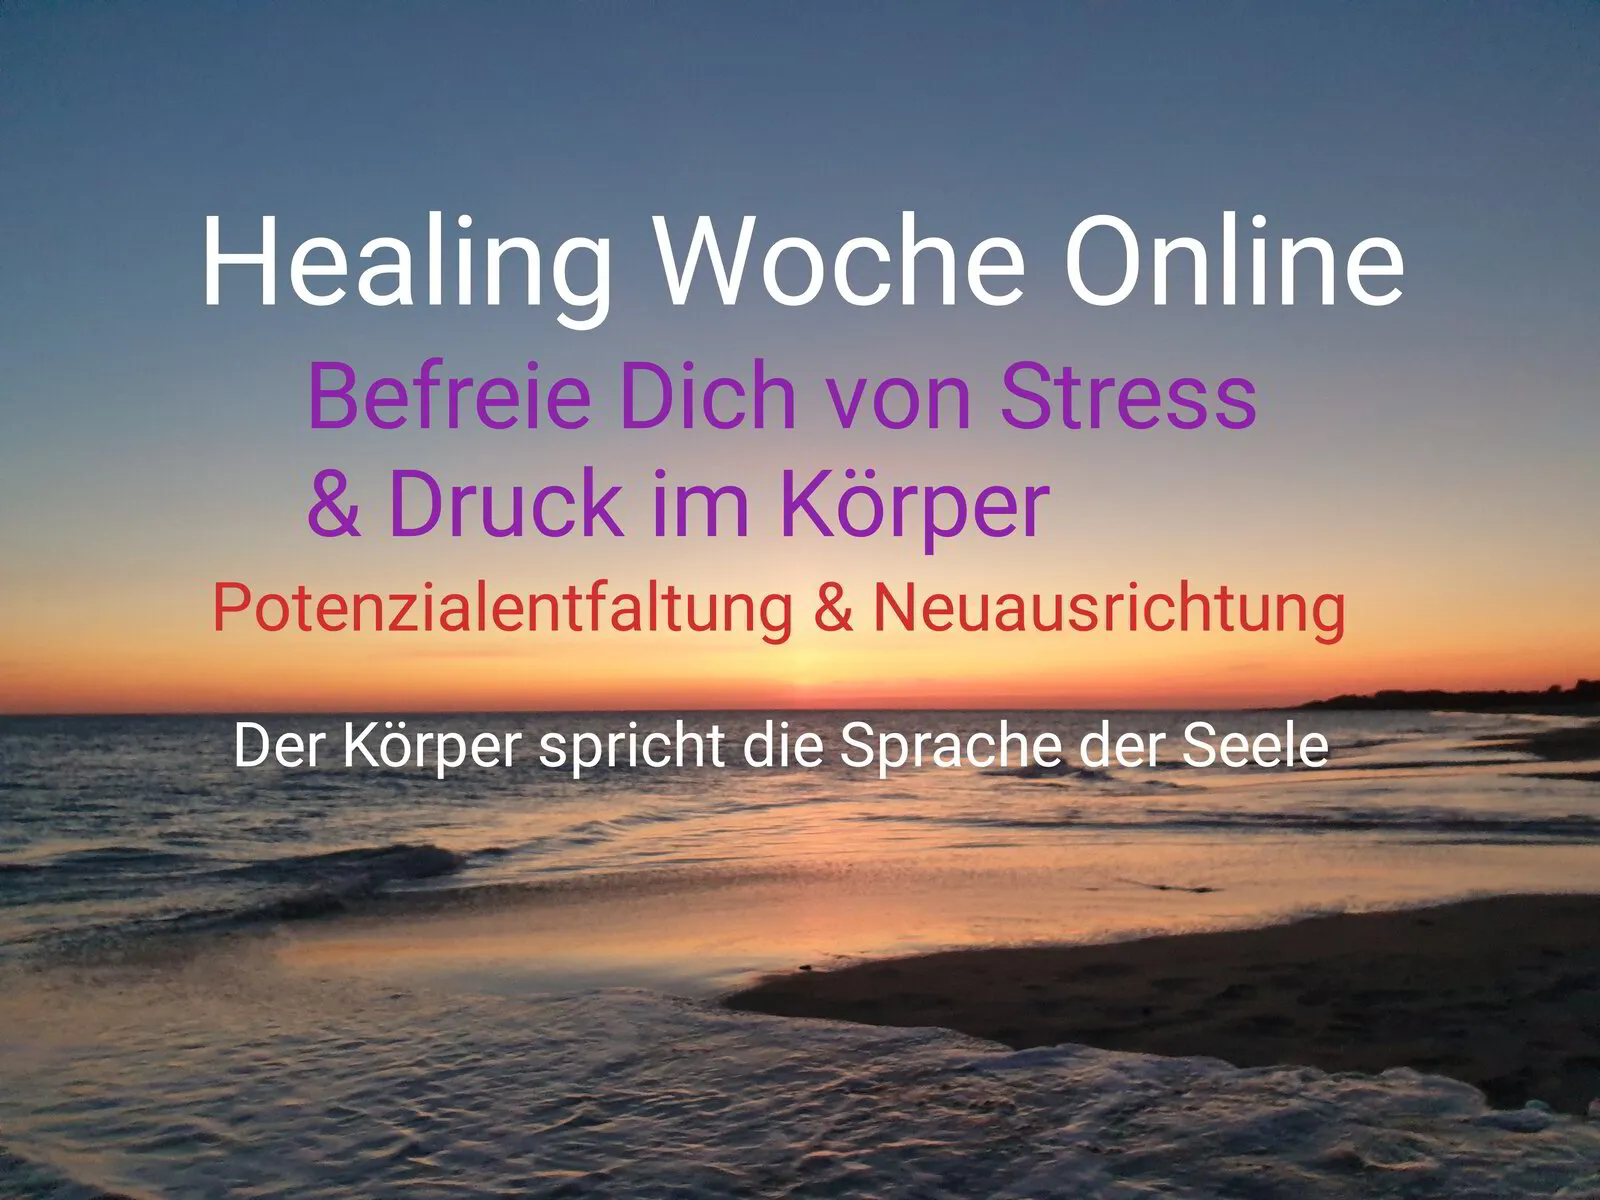 Healing Woche Online/Live